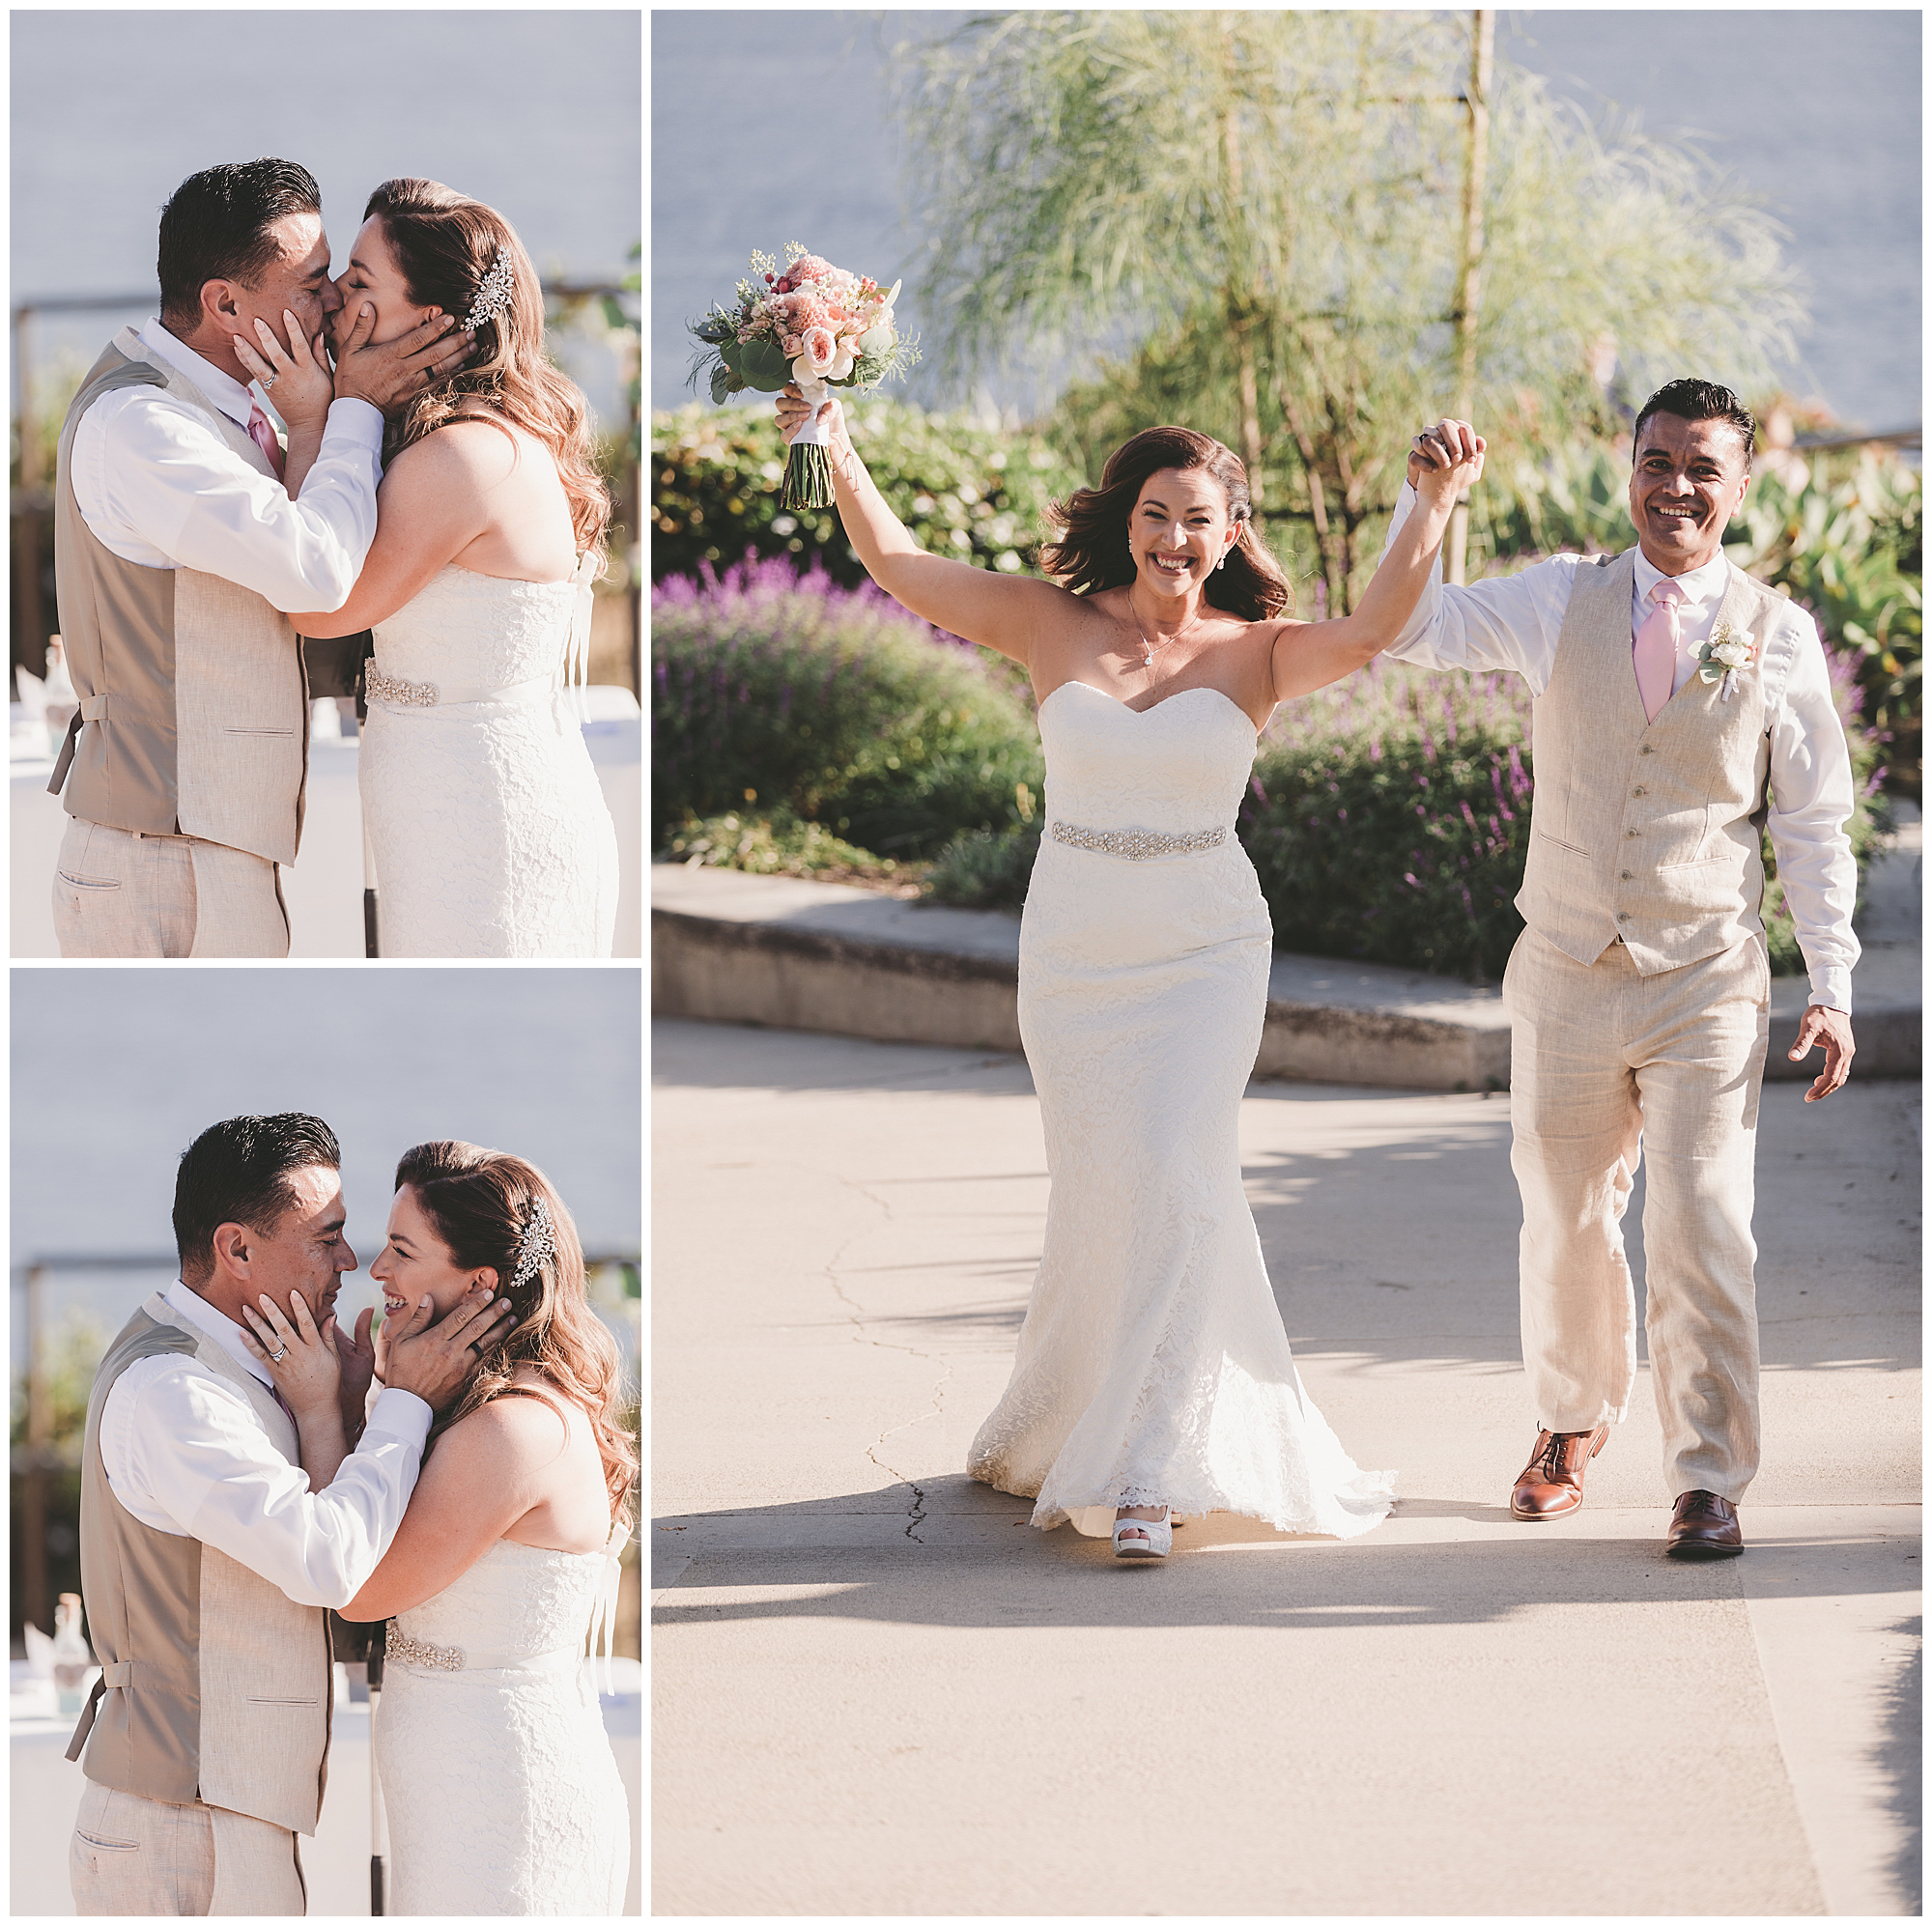 Laguna Beach Crescent Bay Point Park bride and groom first kiss